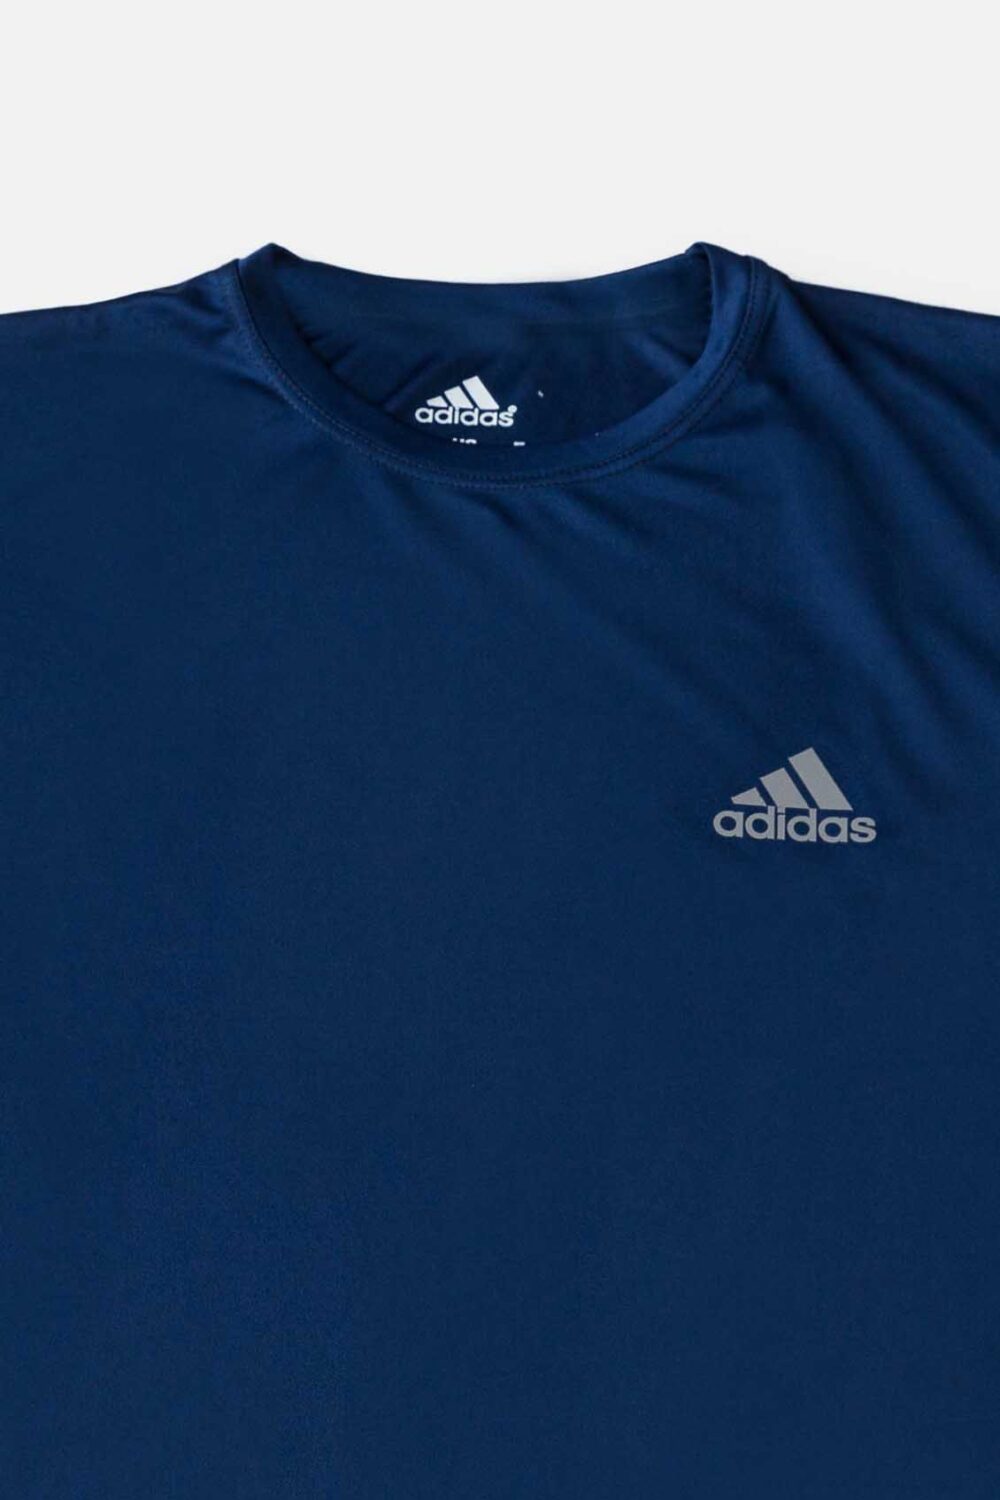 Adidas Premium Sports T Shirt – Aqua Blue